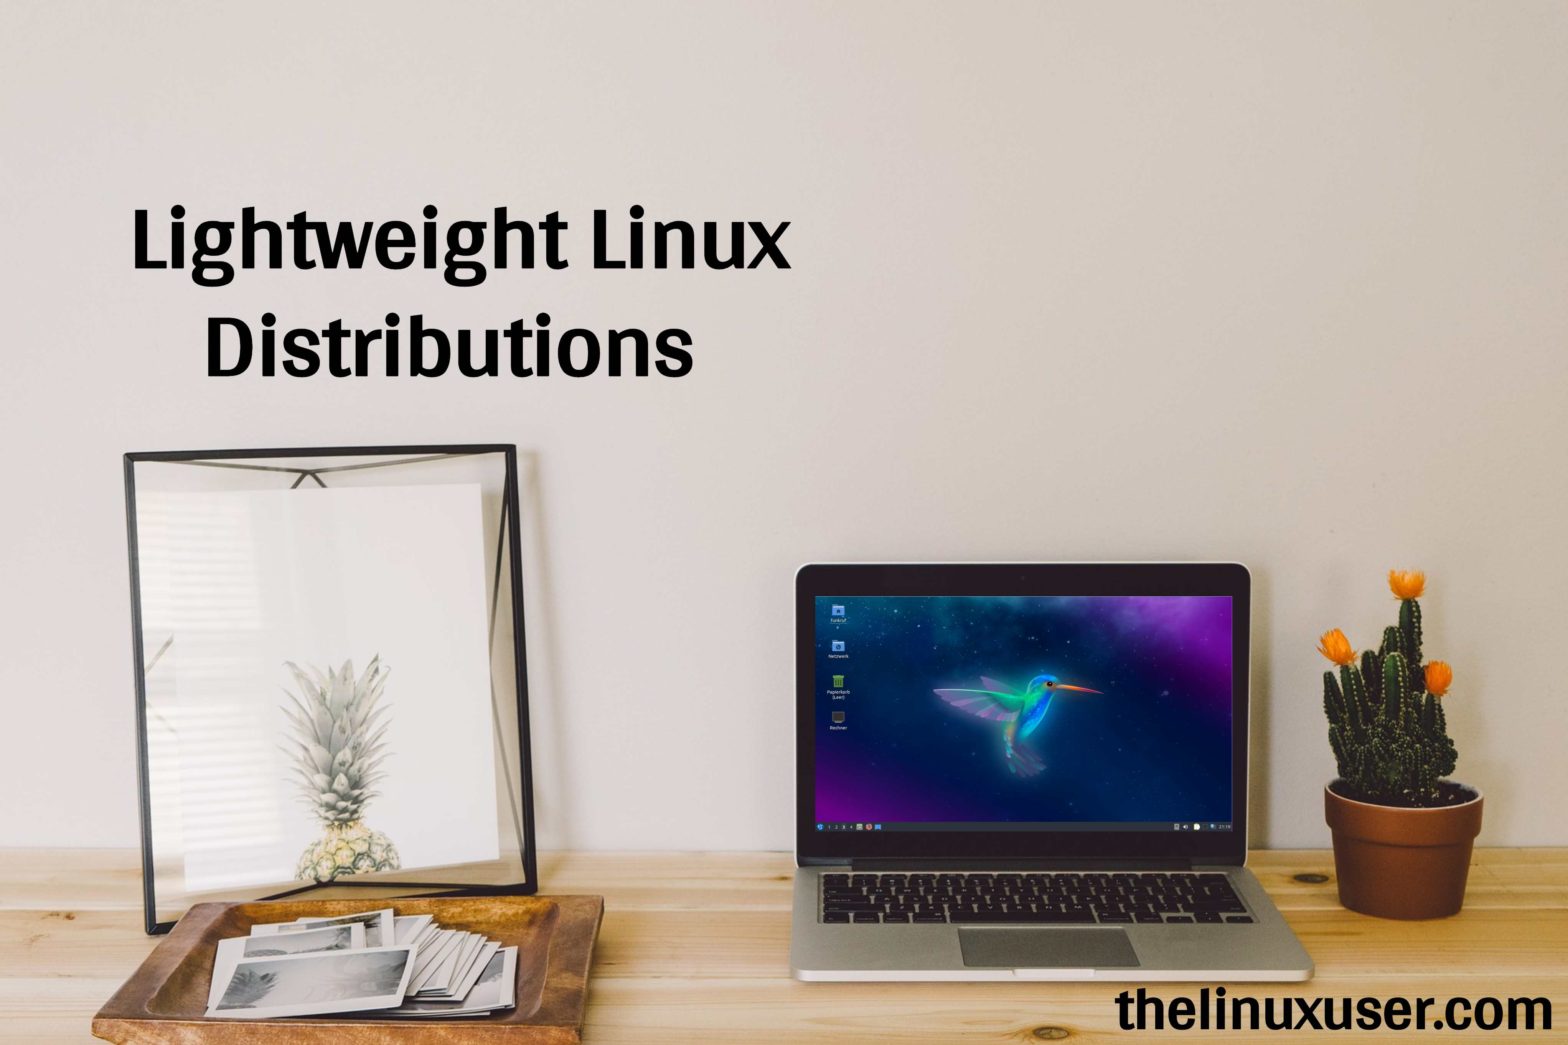 Lightweight Linux distribution